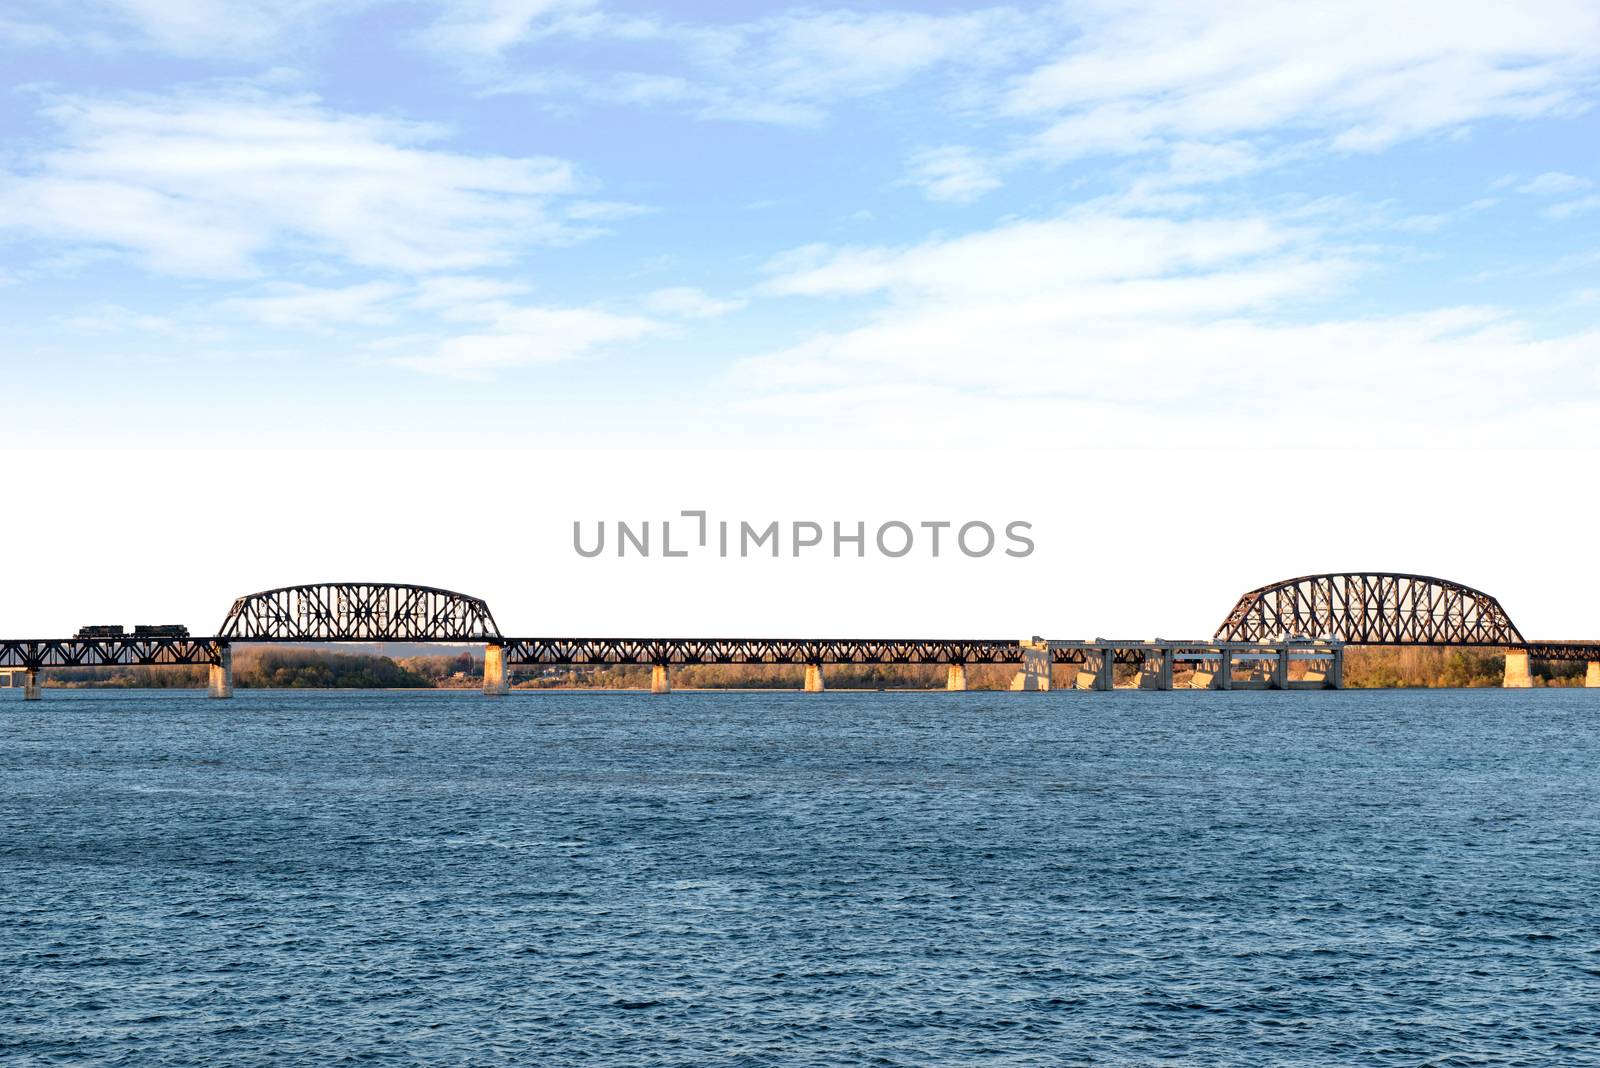 Railroad Bridge in Cincinnati, Ohio, USA by krisblackphotography